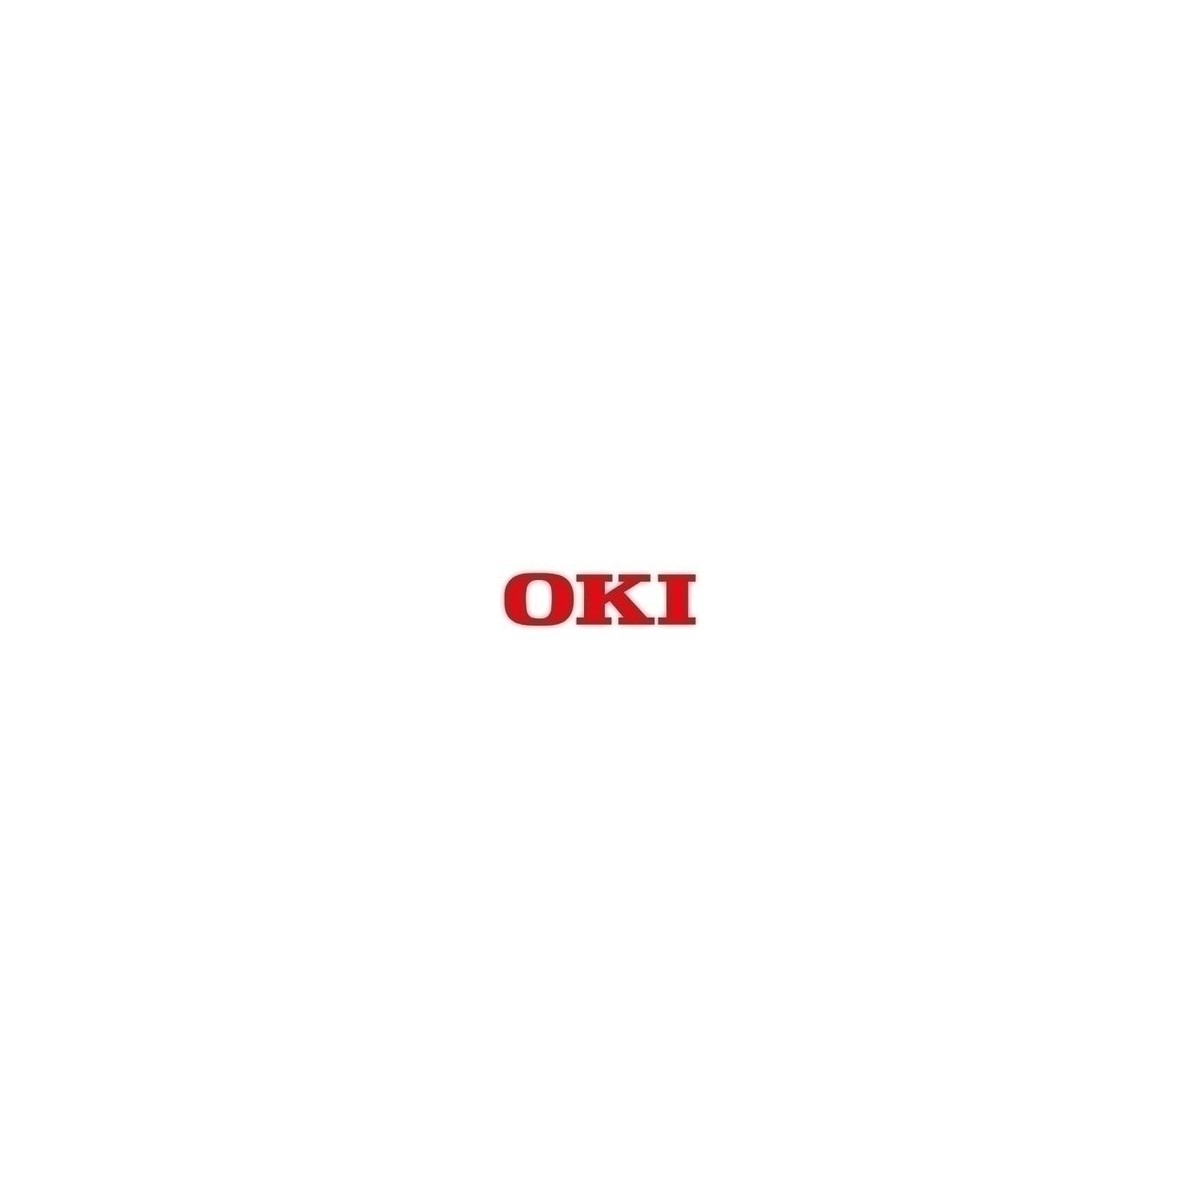 OKI Toner ES3640 Magenta - 15000 pages - Magenta